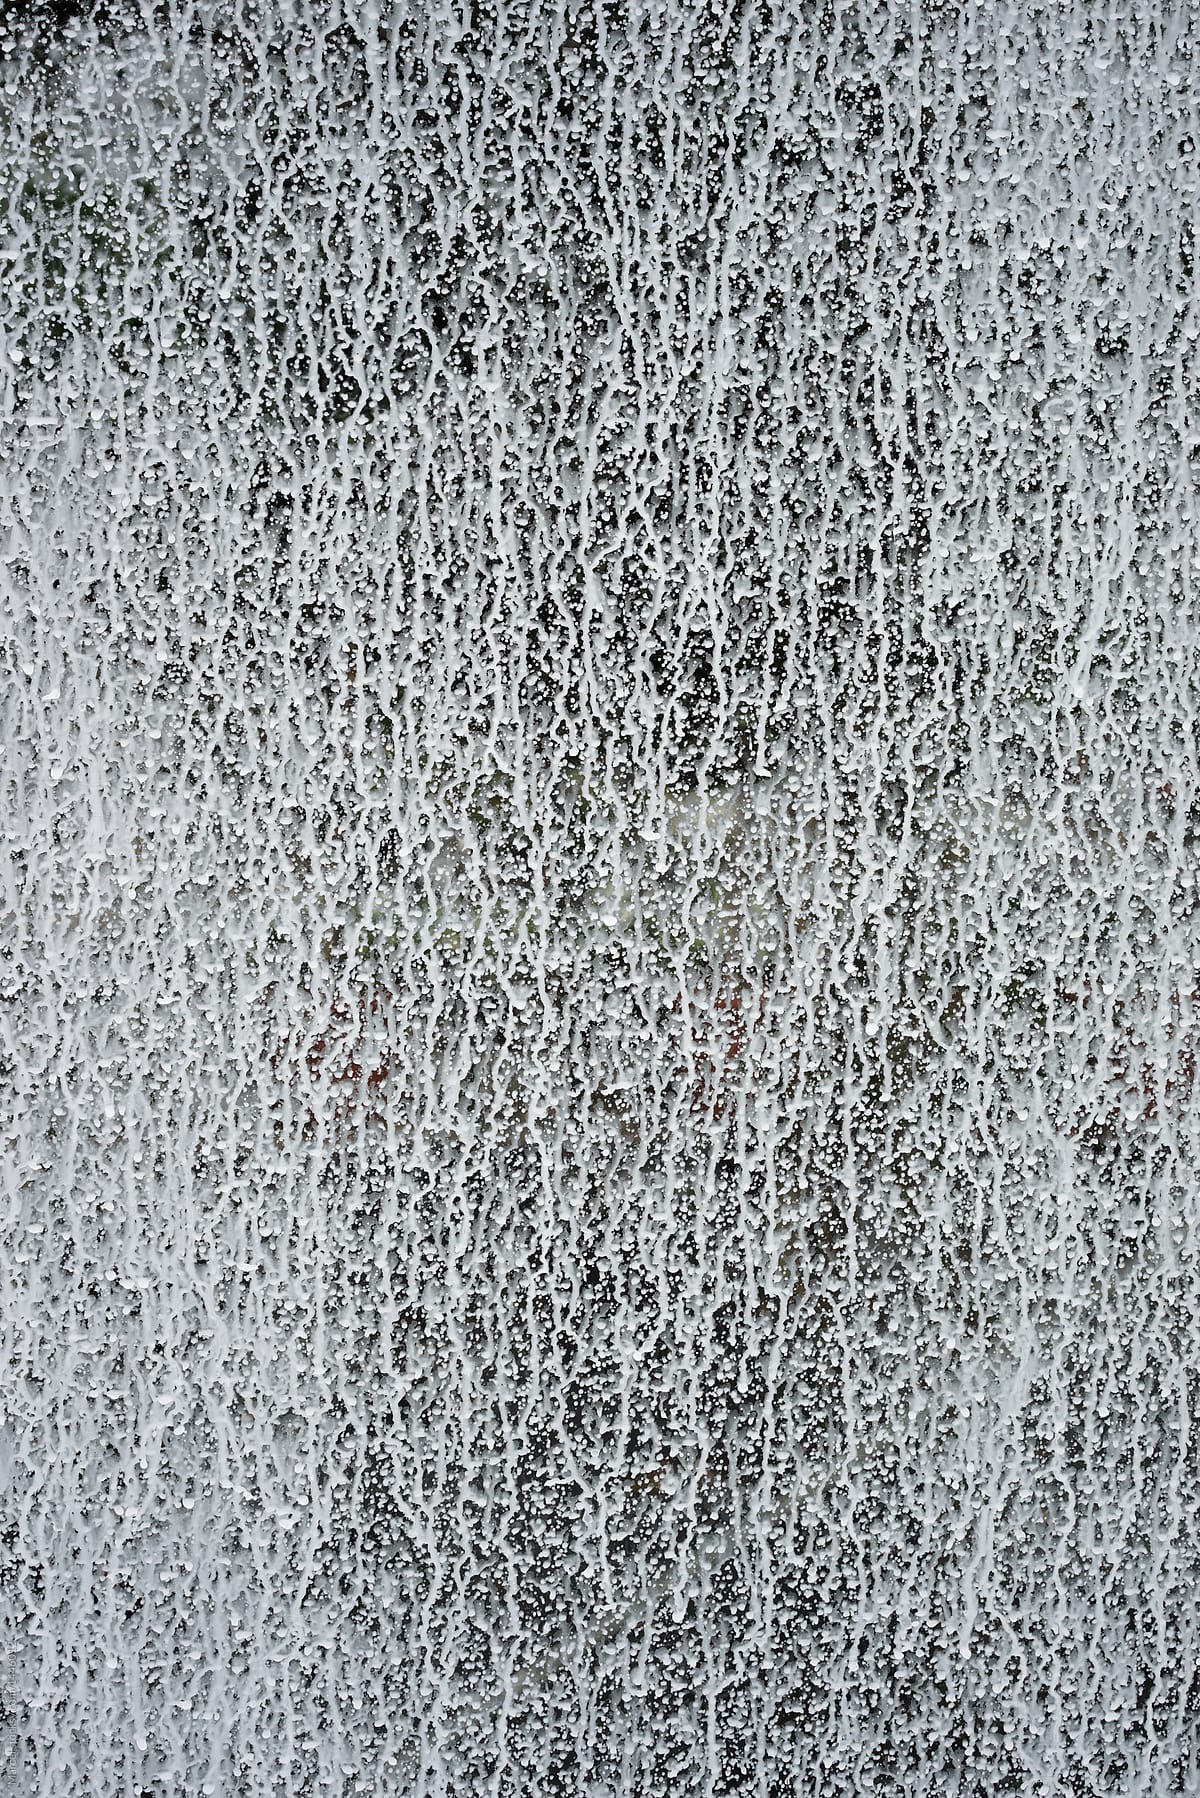 White liquid coating on a greenhouse